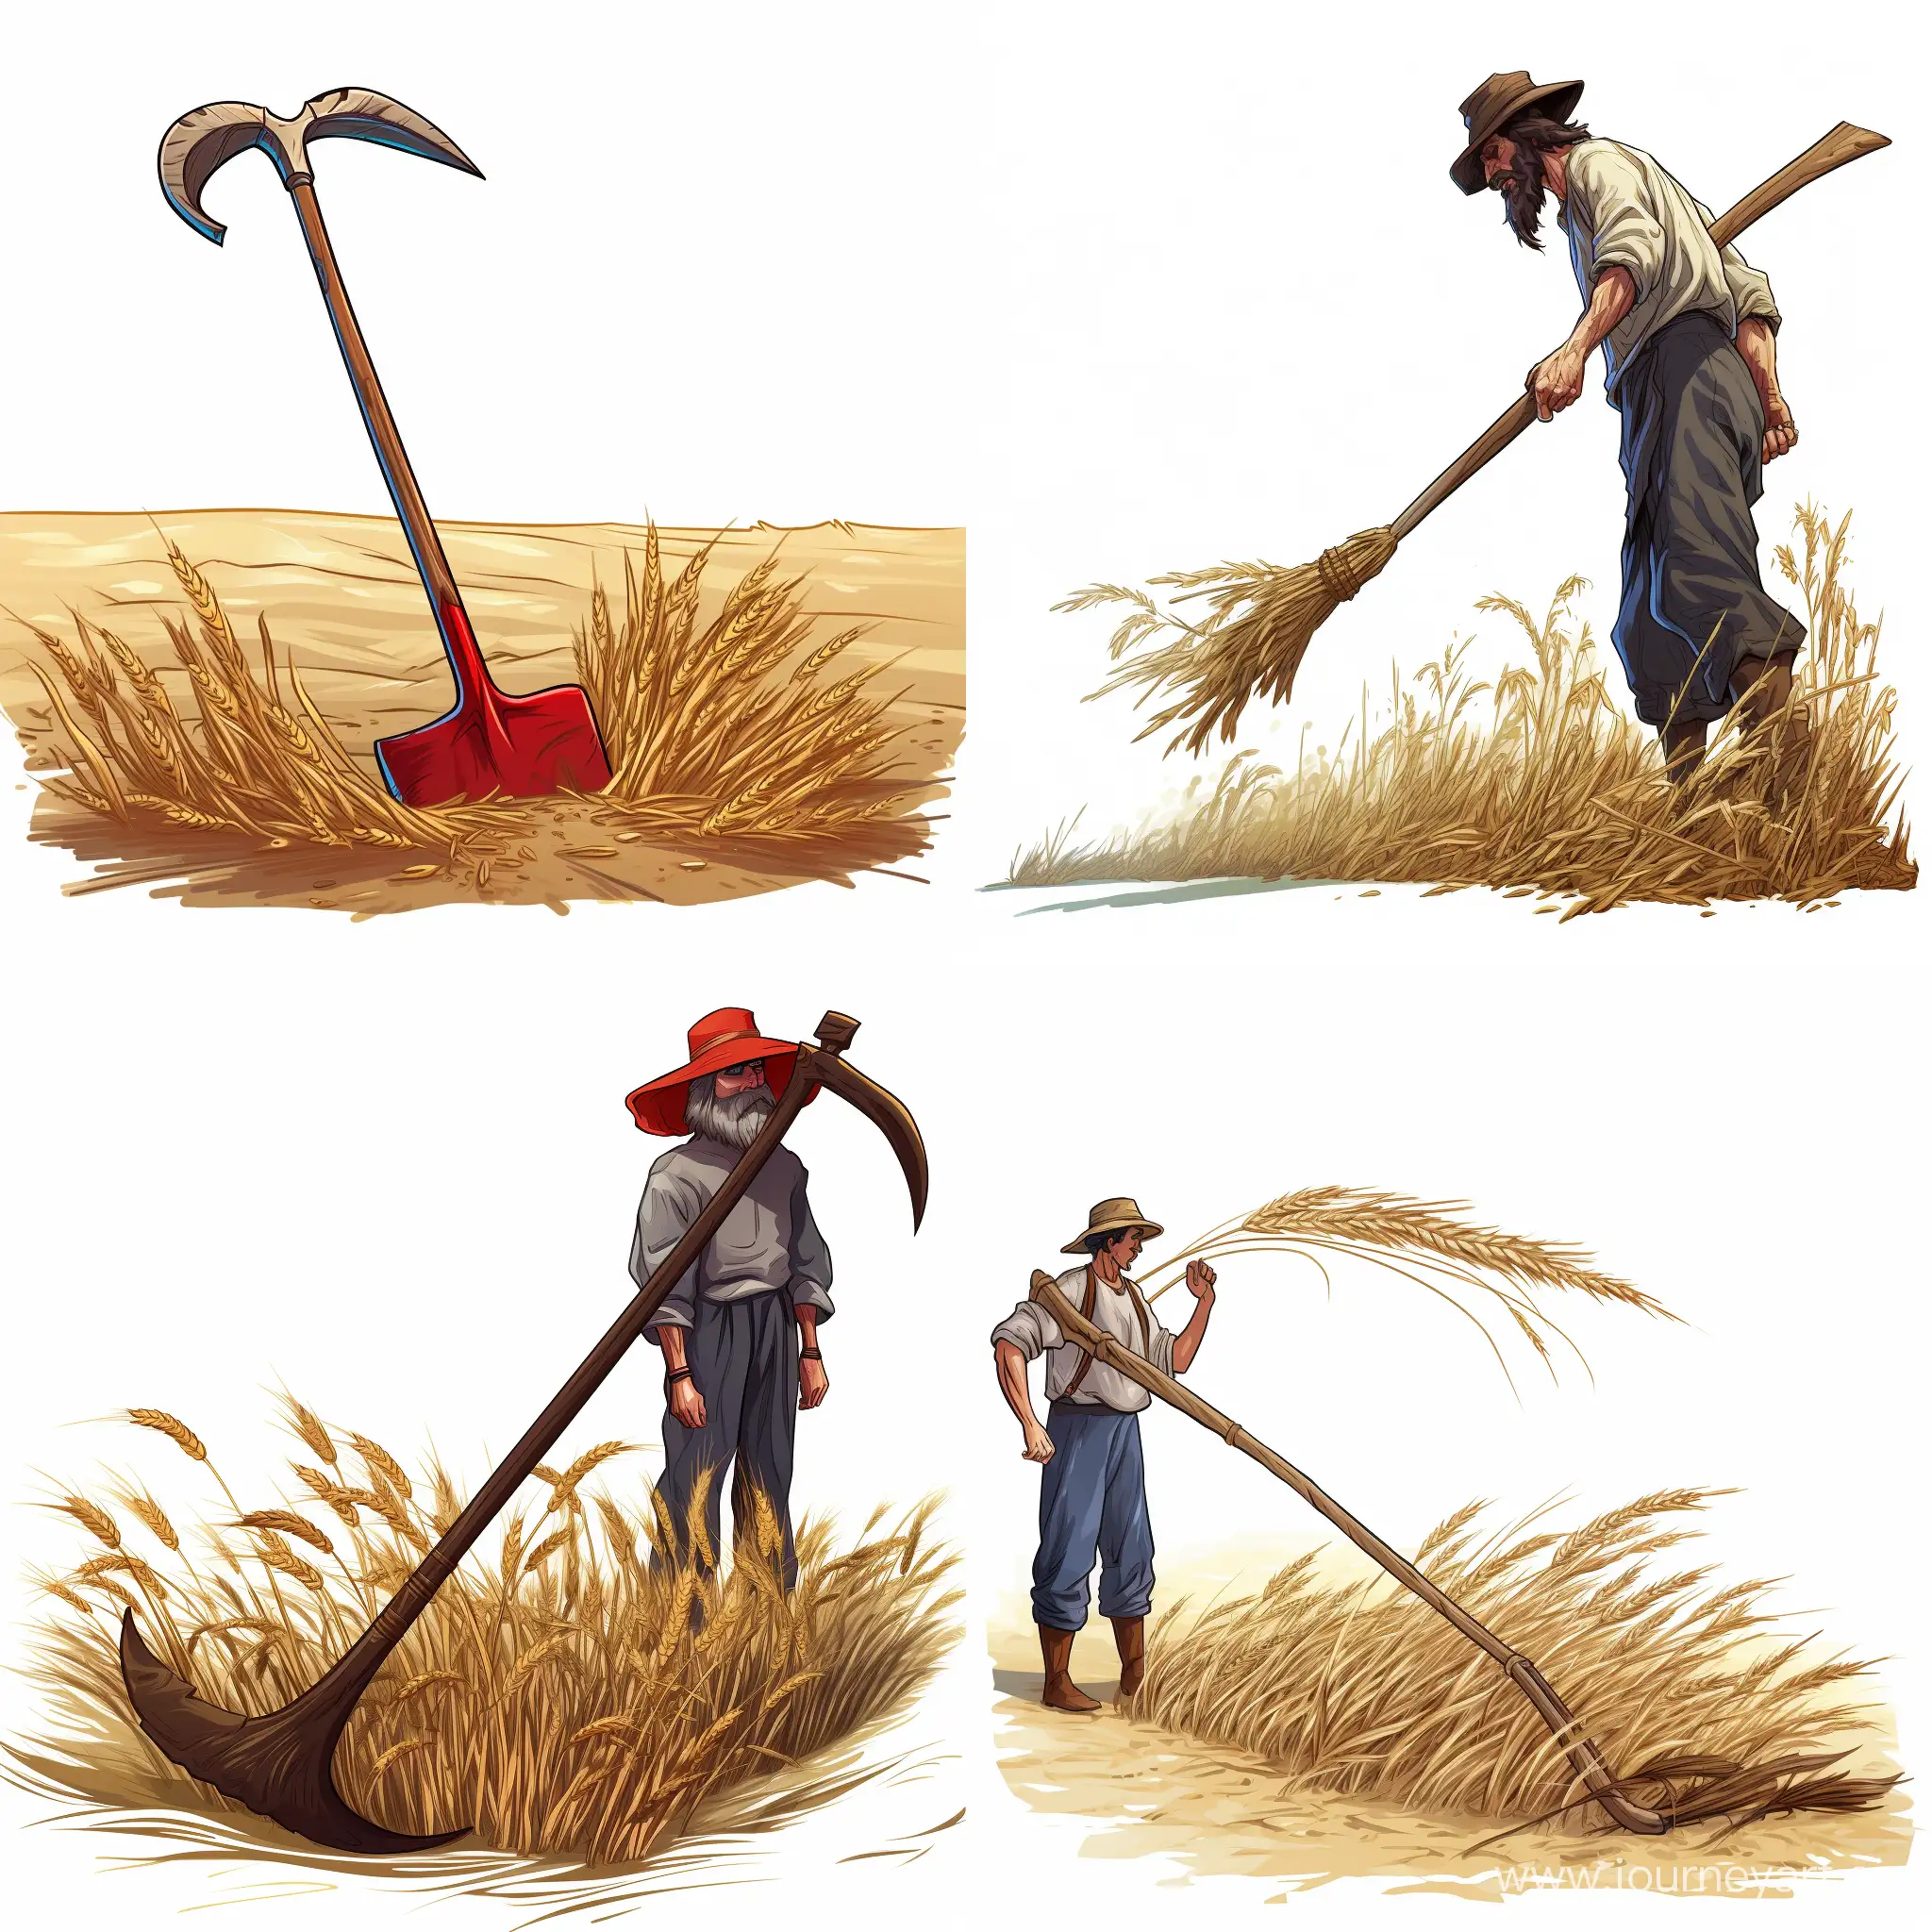 Scythe for reaping wheat，cartoon
, white background